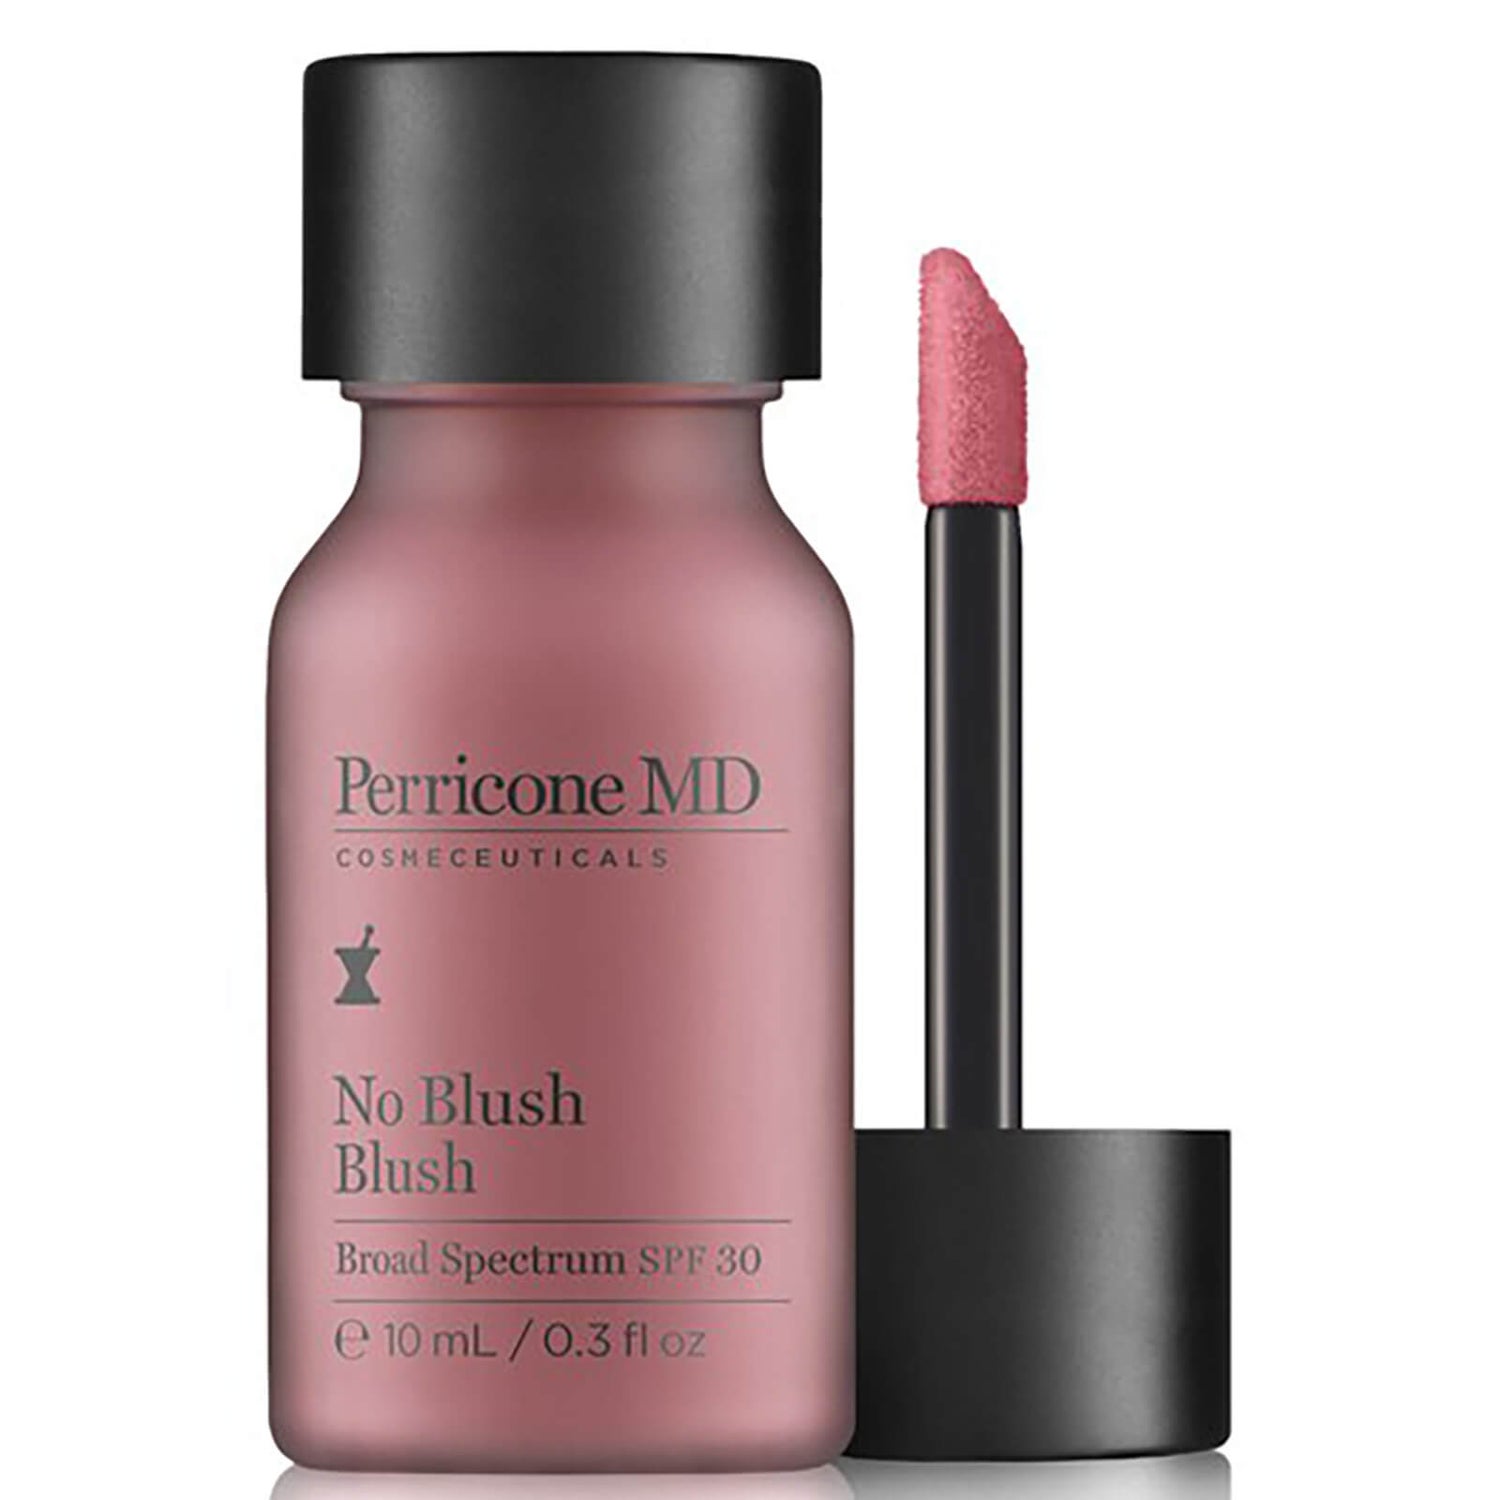 Perricone MD No Blush Blush (10ml)